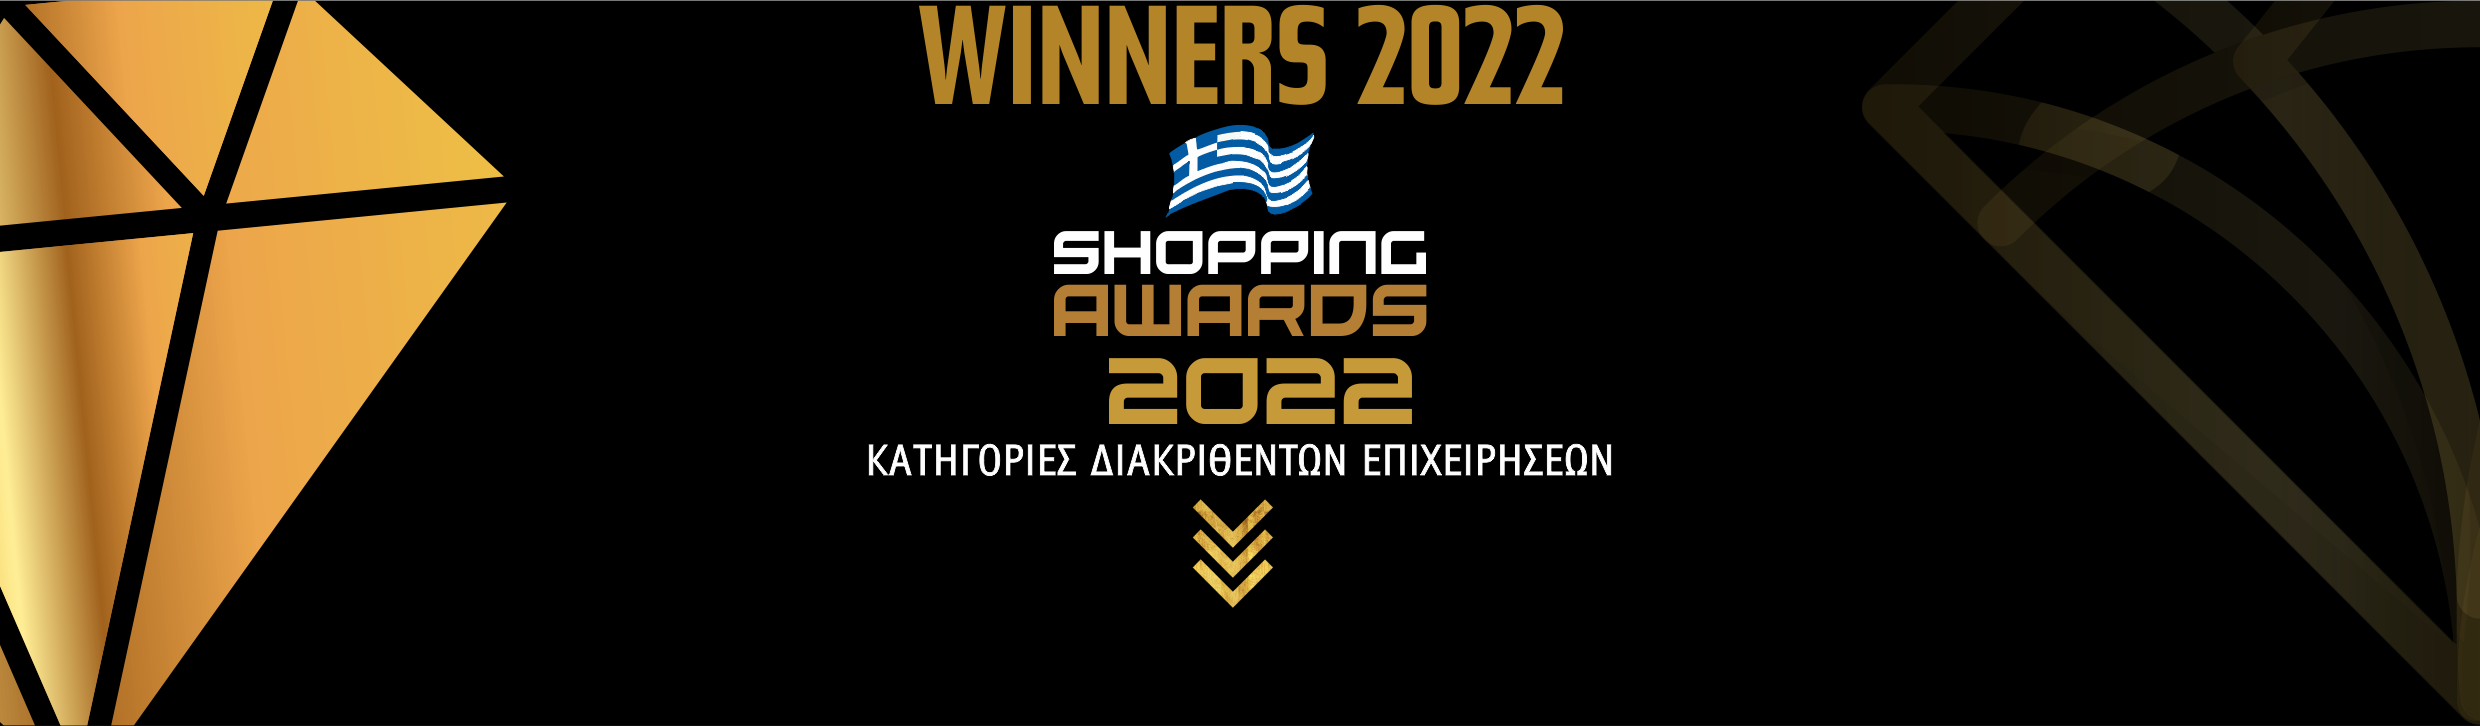 shopping_awards_2022